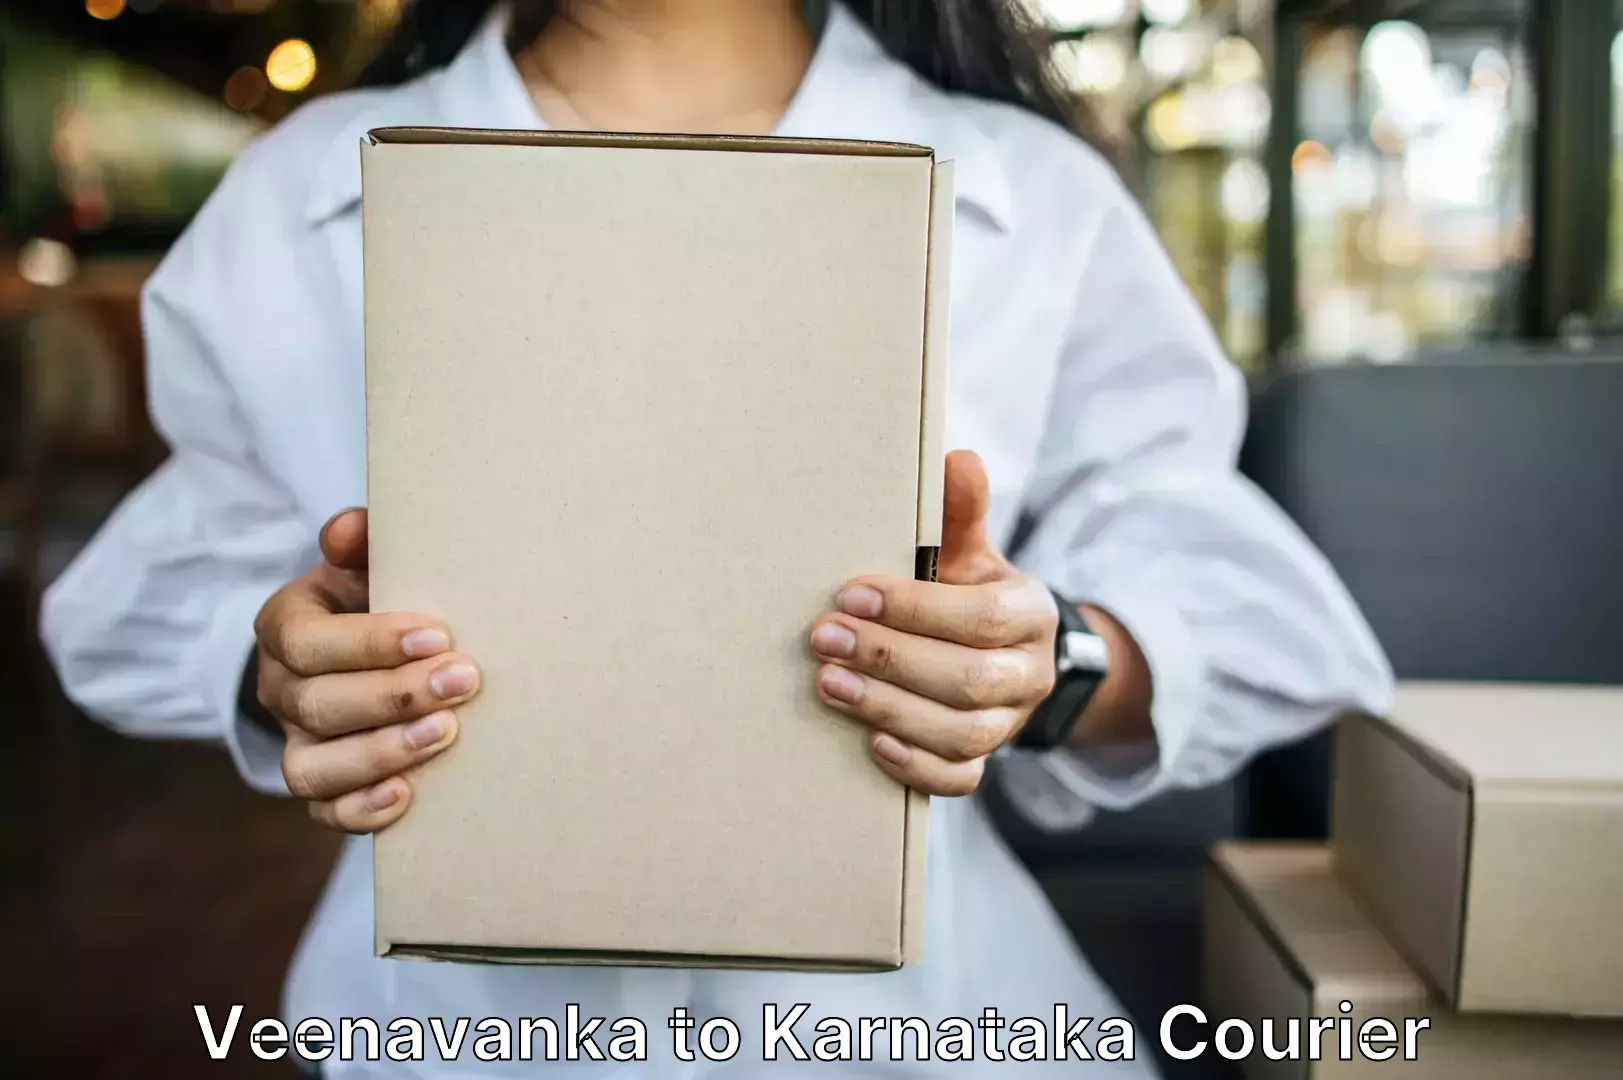 Luggage delivery system Veenavanka to Karnataka